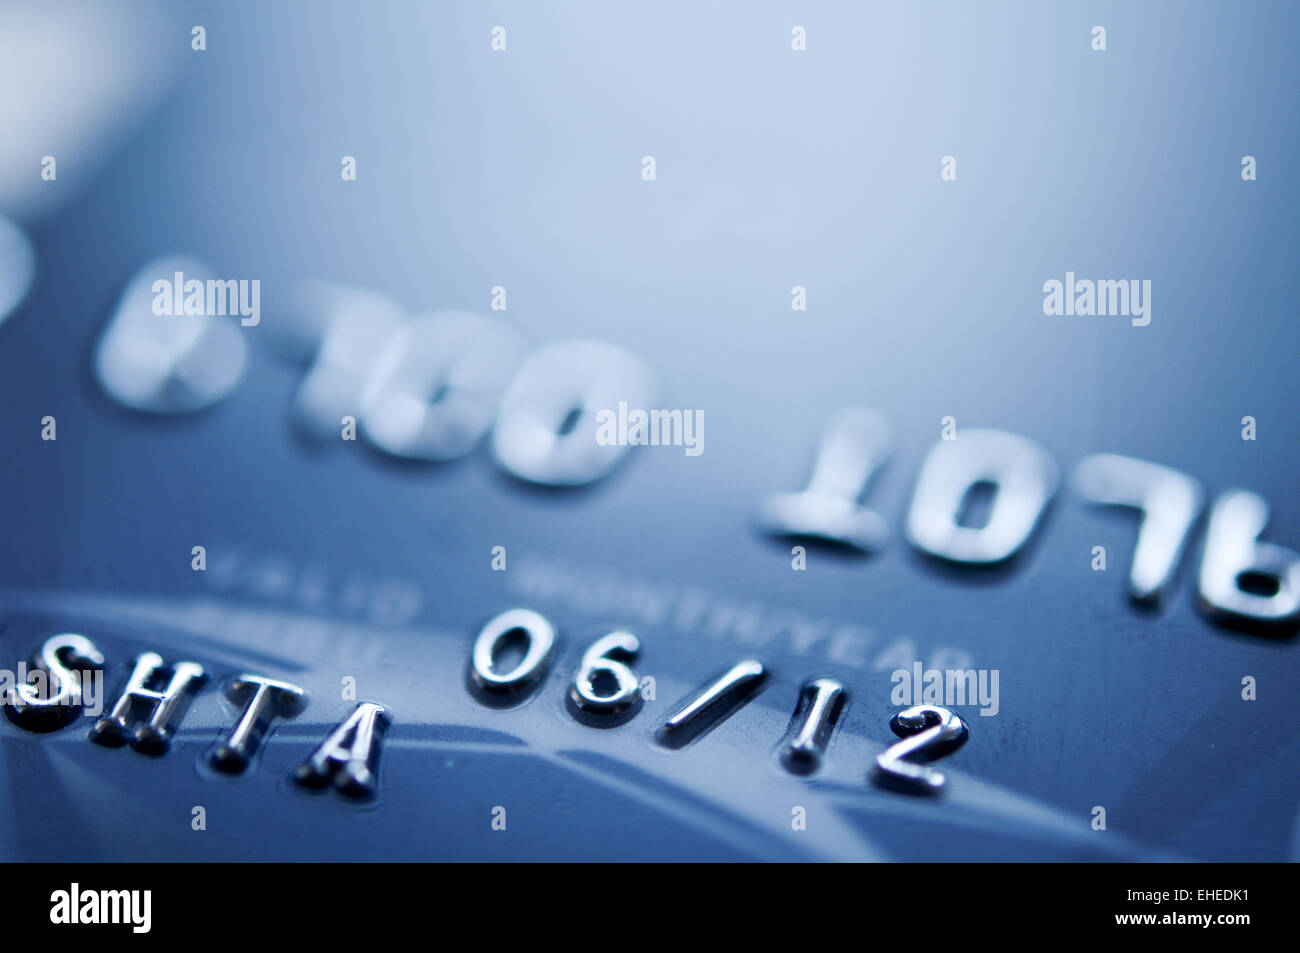 Blue credit card Stock Photo